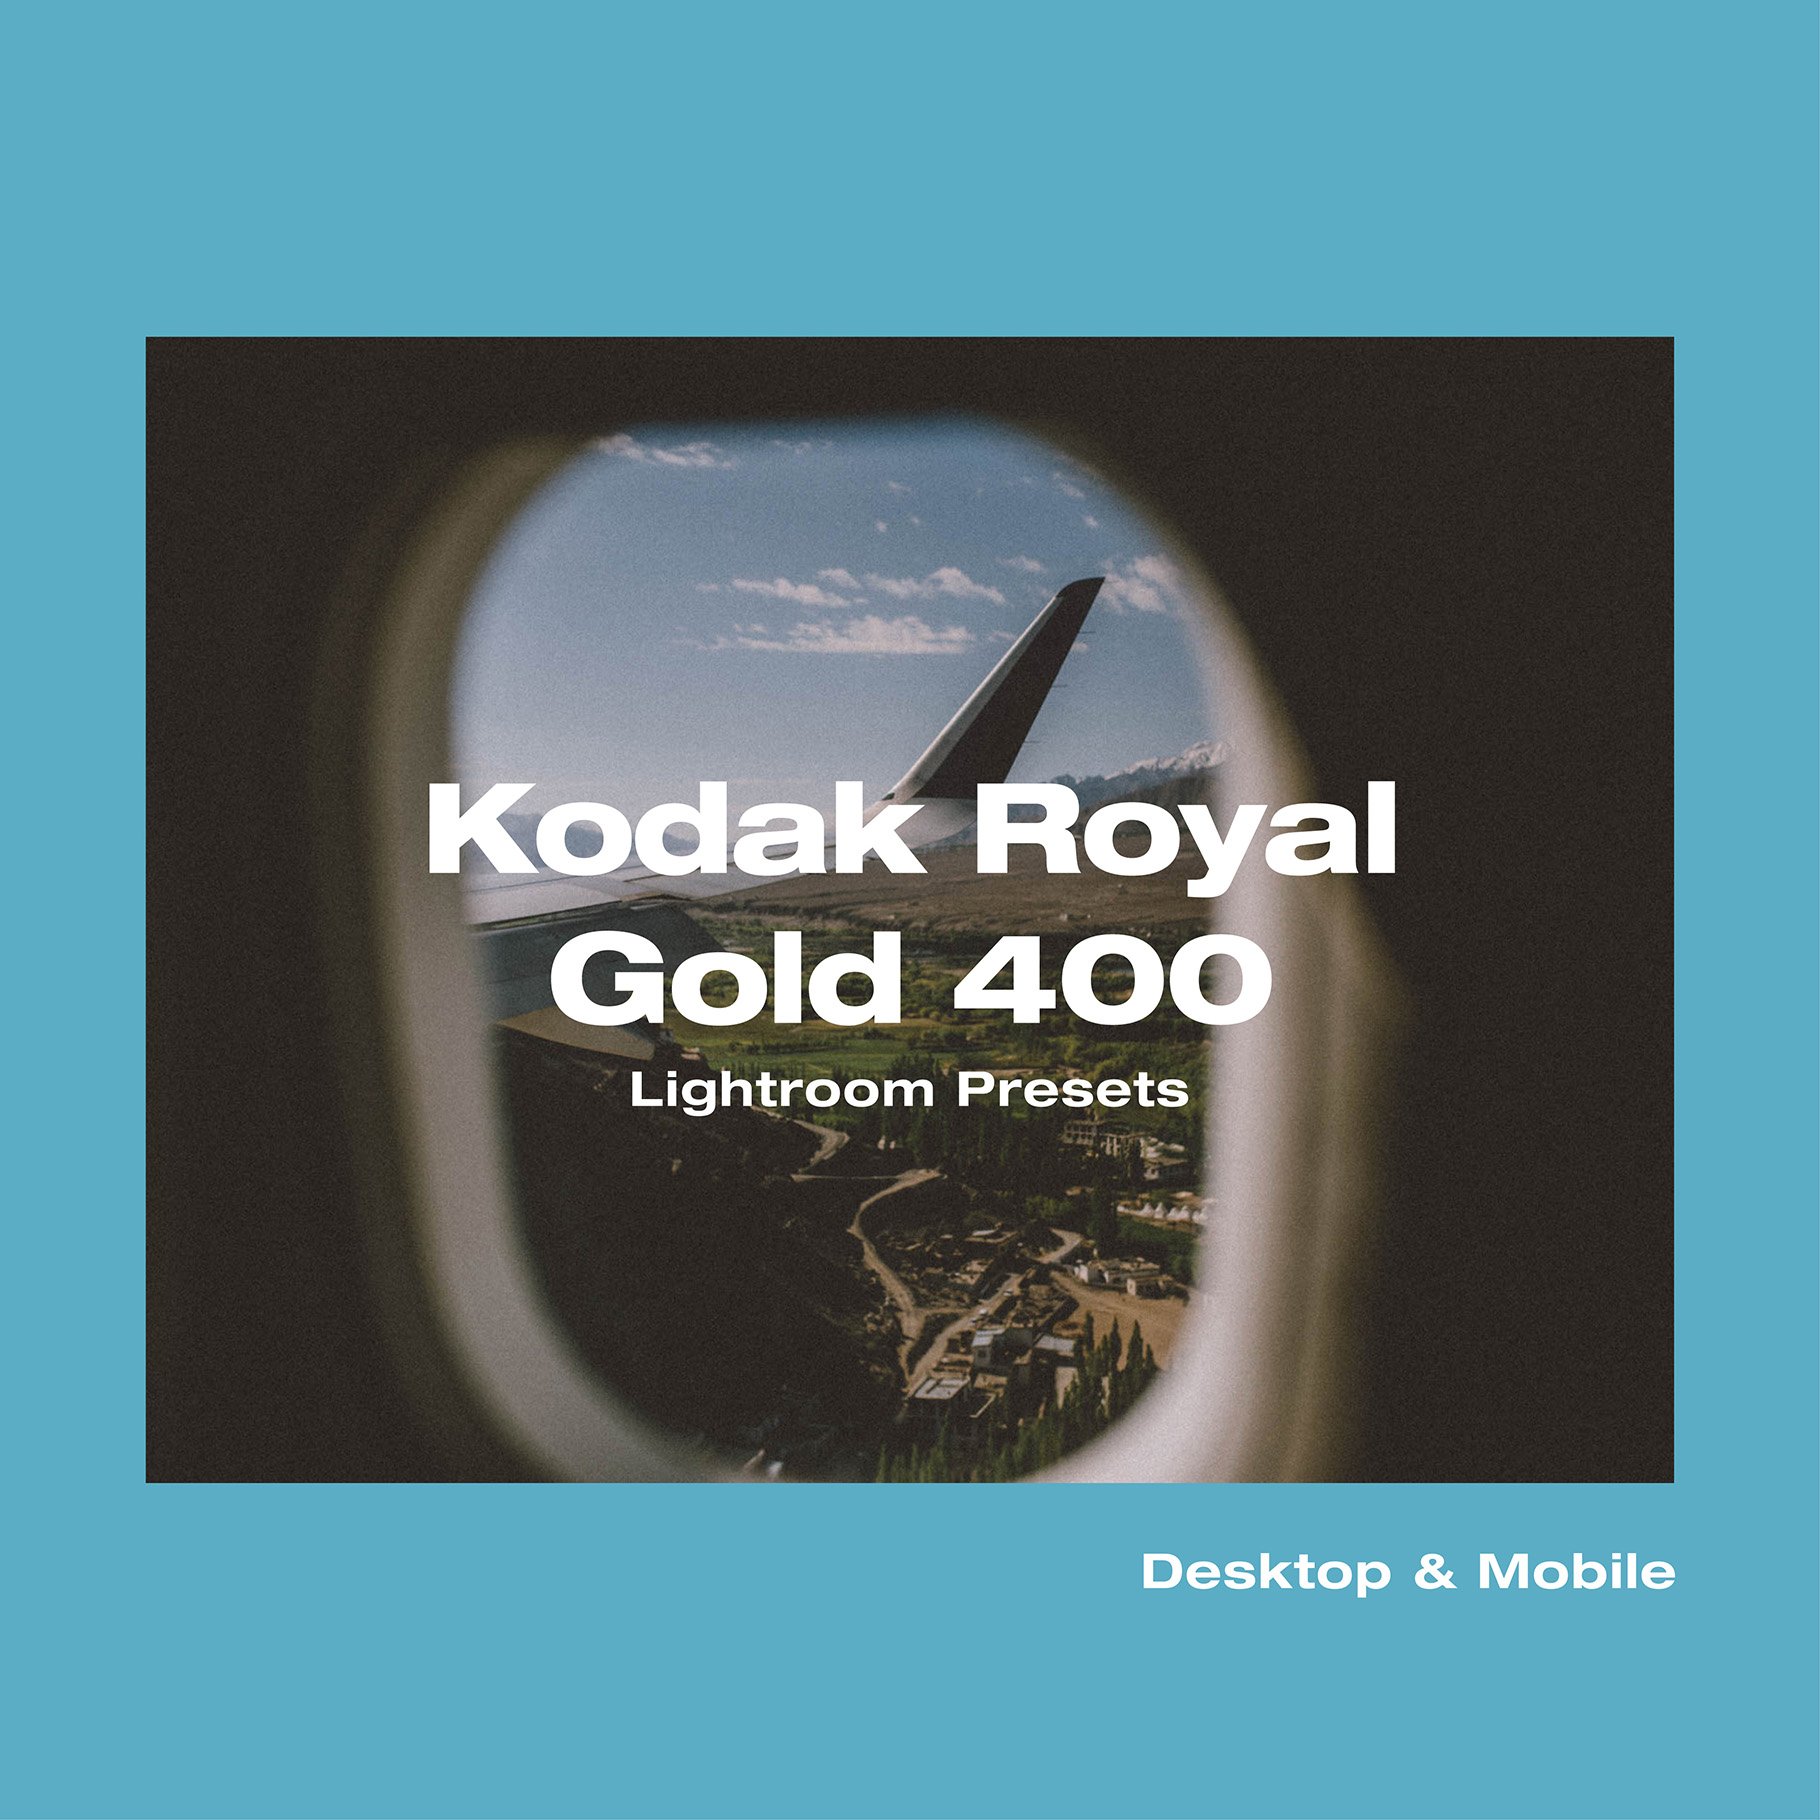 Kodak Royal Gold 400 Presetscover image.